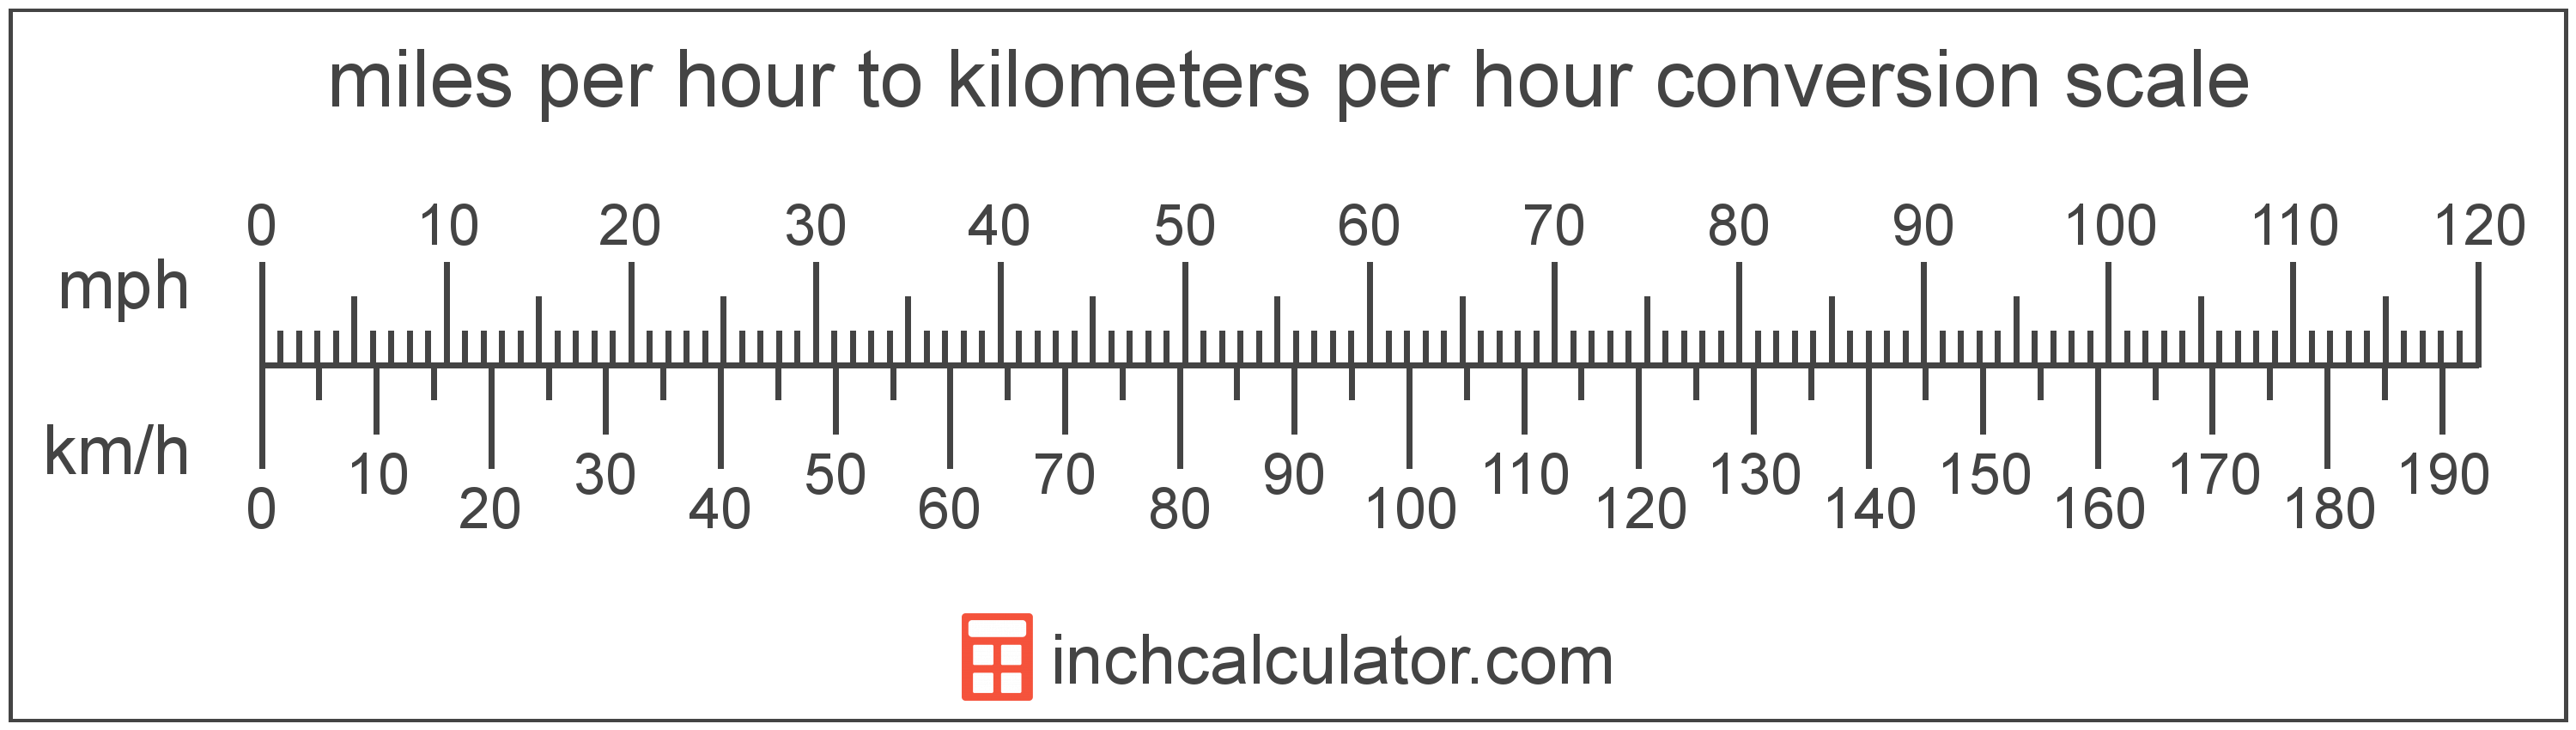 Mph To Kph Conversion Miles Per Hour To Kilometers Per Hour